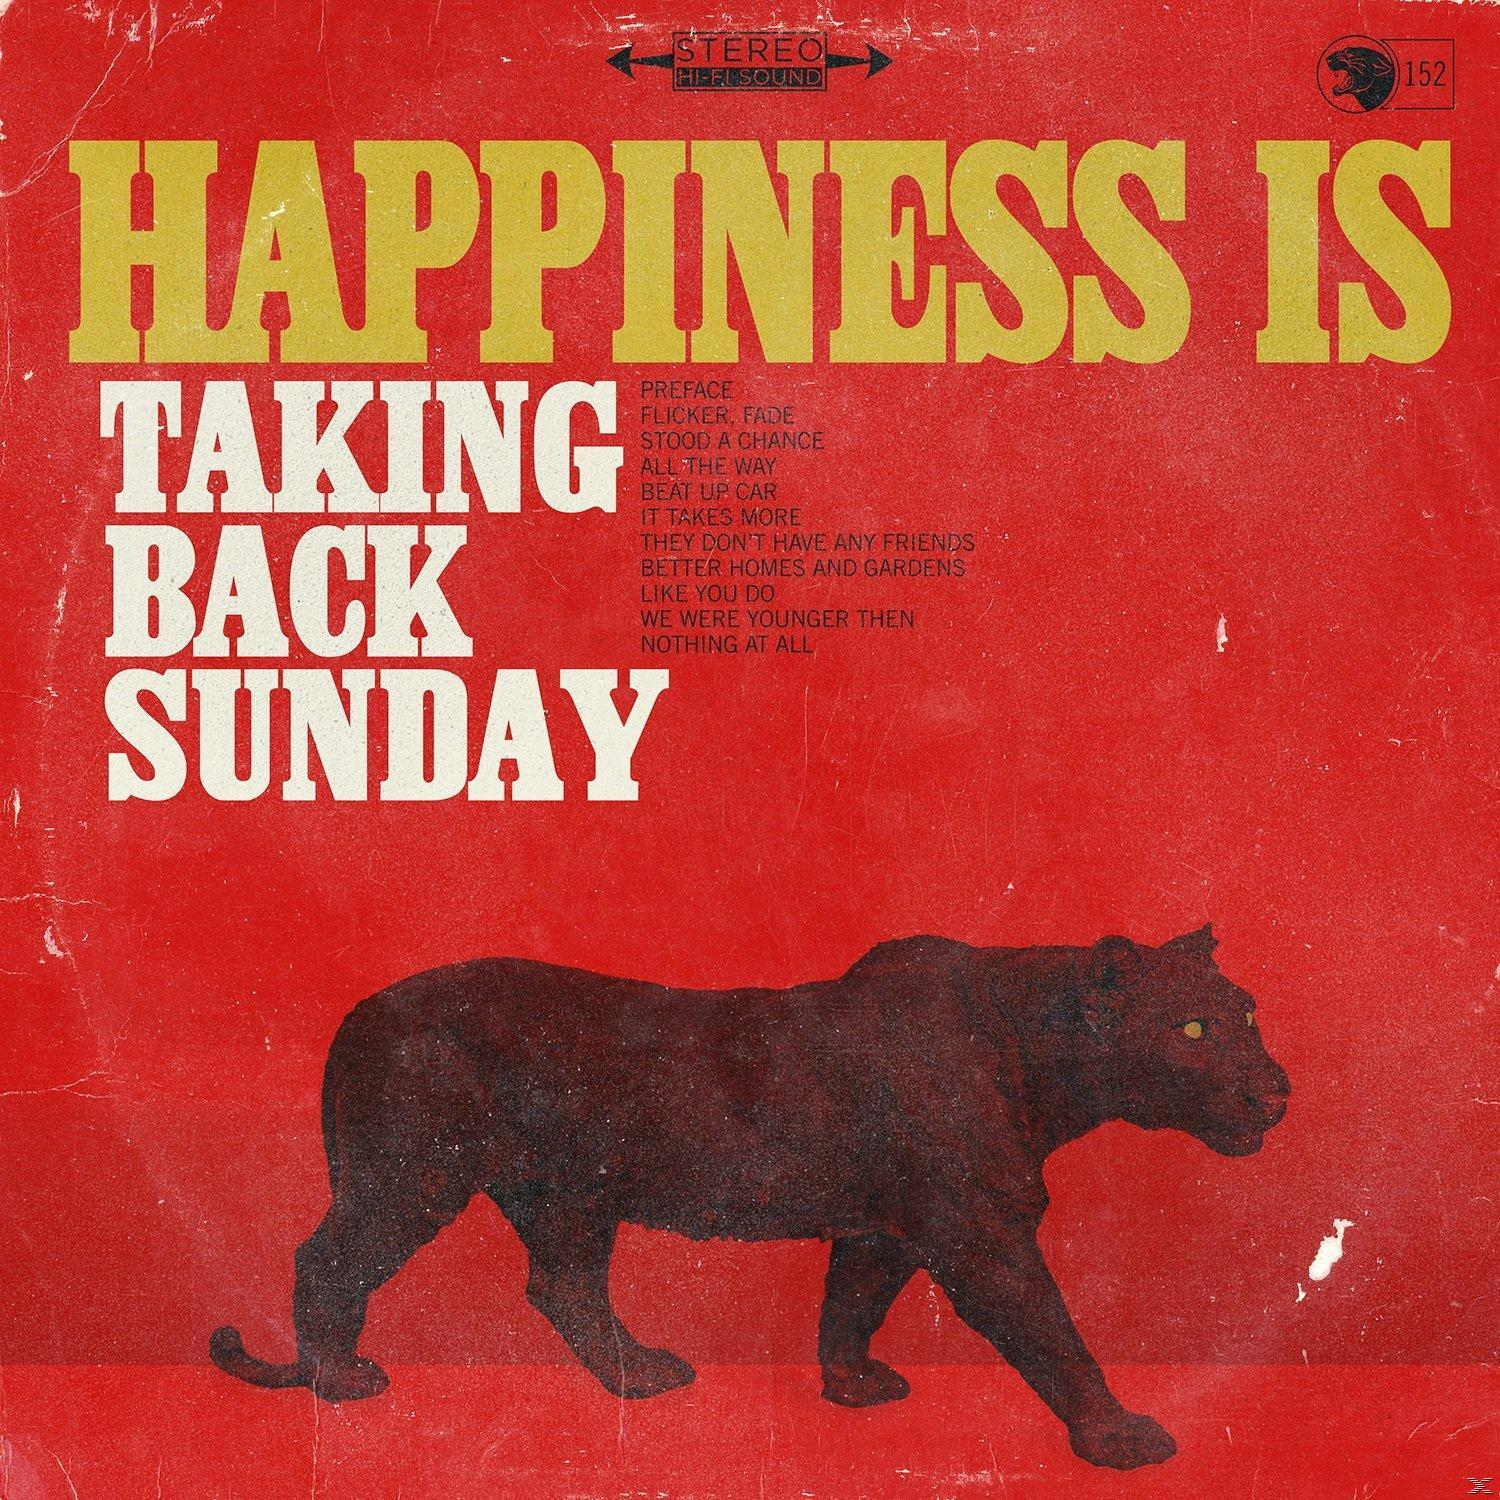 Vinyl) Happiness Sunday - - Is Back Taking (Vinyl) (Ltd